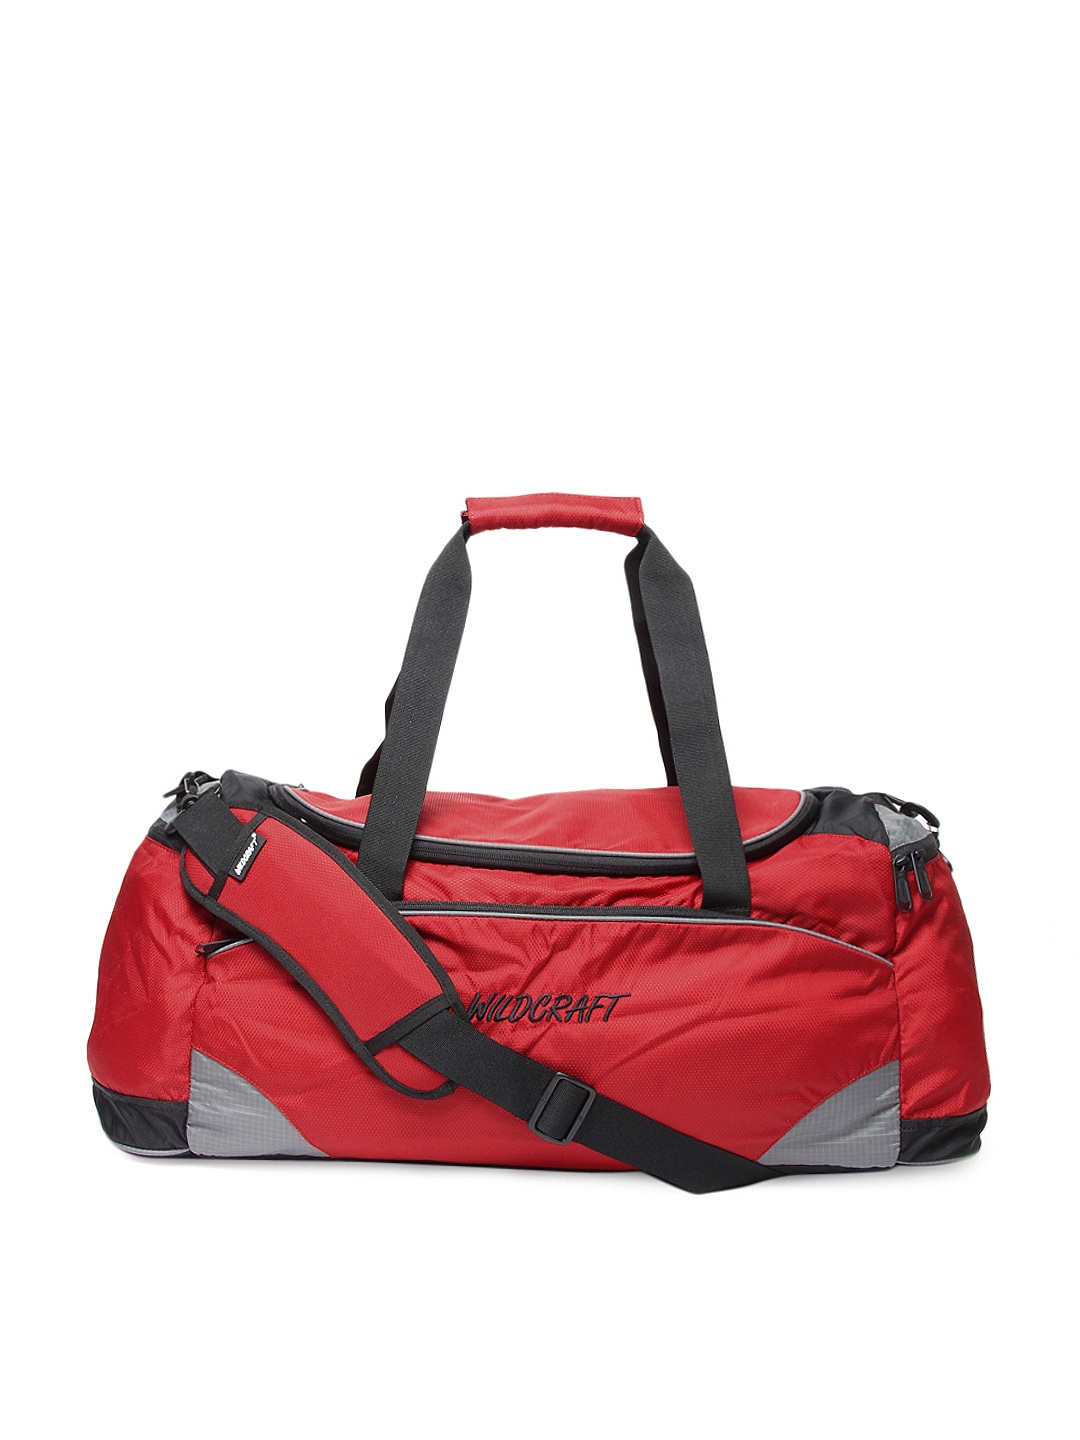 Wildcraft Unisex Red Duffle Bag